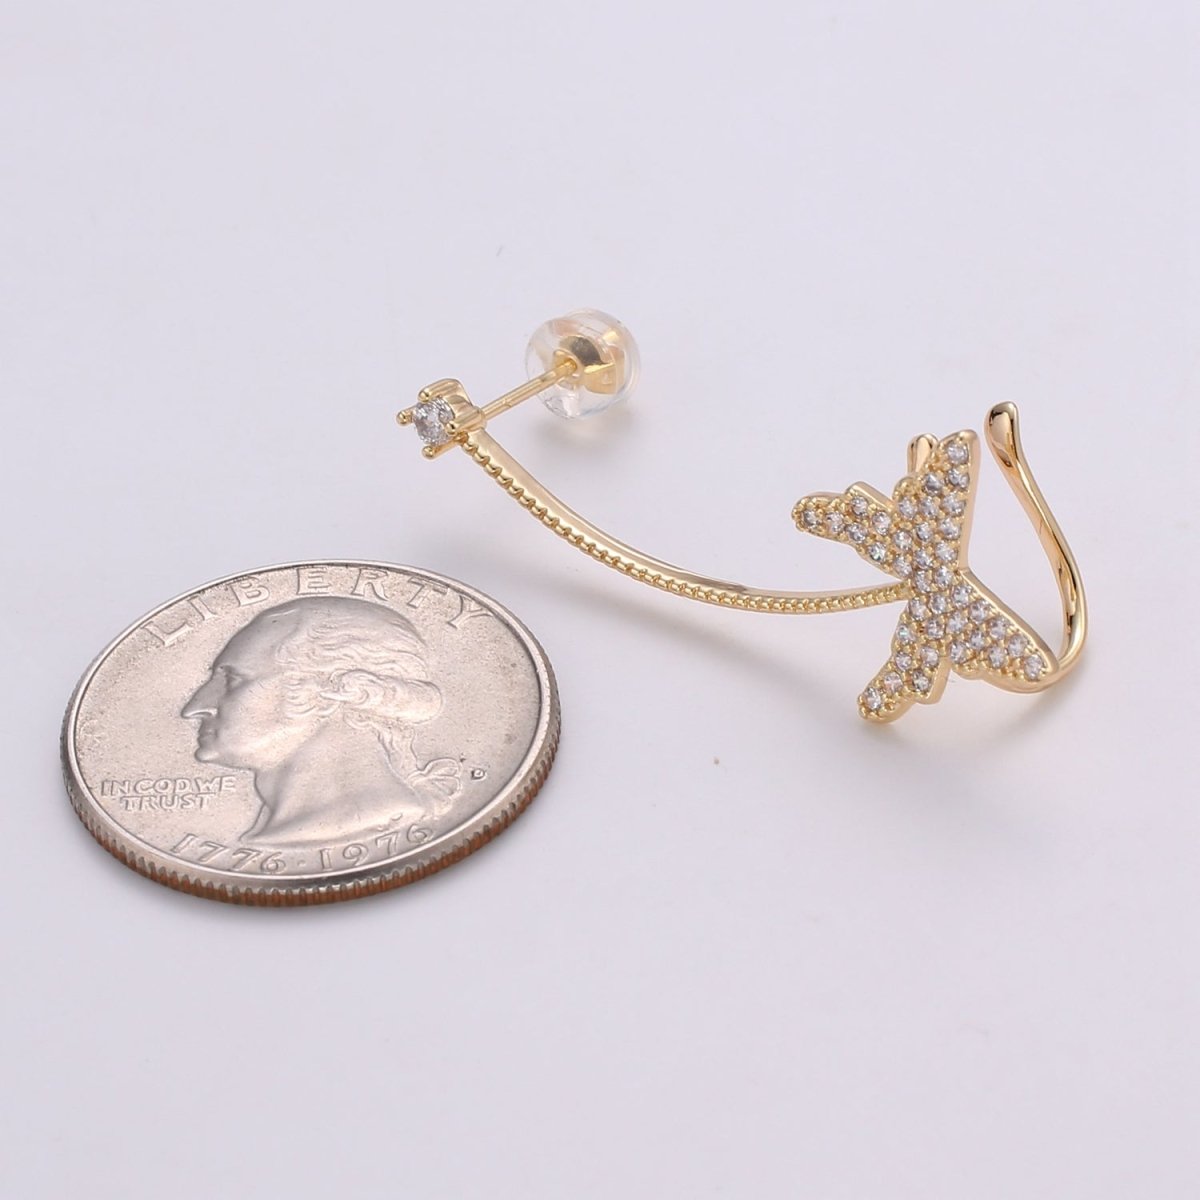 1x Butterfly climber earrings, Gold stud earrings, ear climber, ear cuffs, adorable design, Cz Earring delicate earrings, everyday, gifts AI-139 - DLUXCA